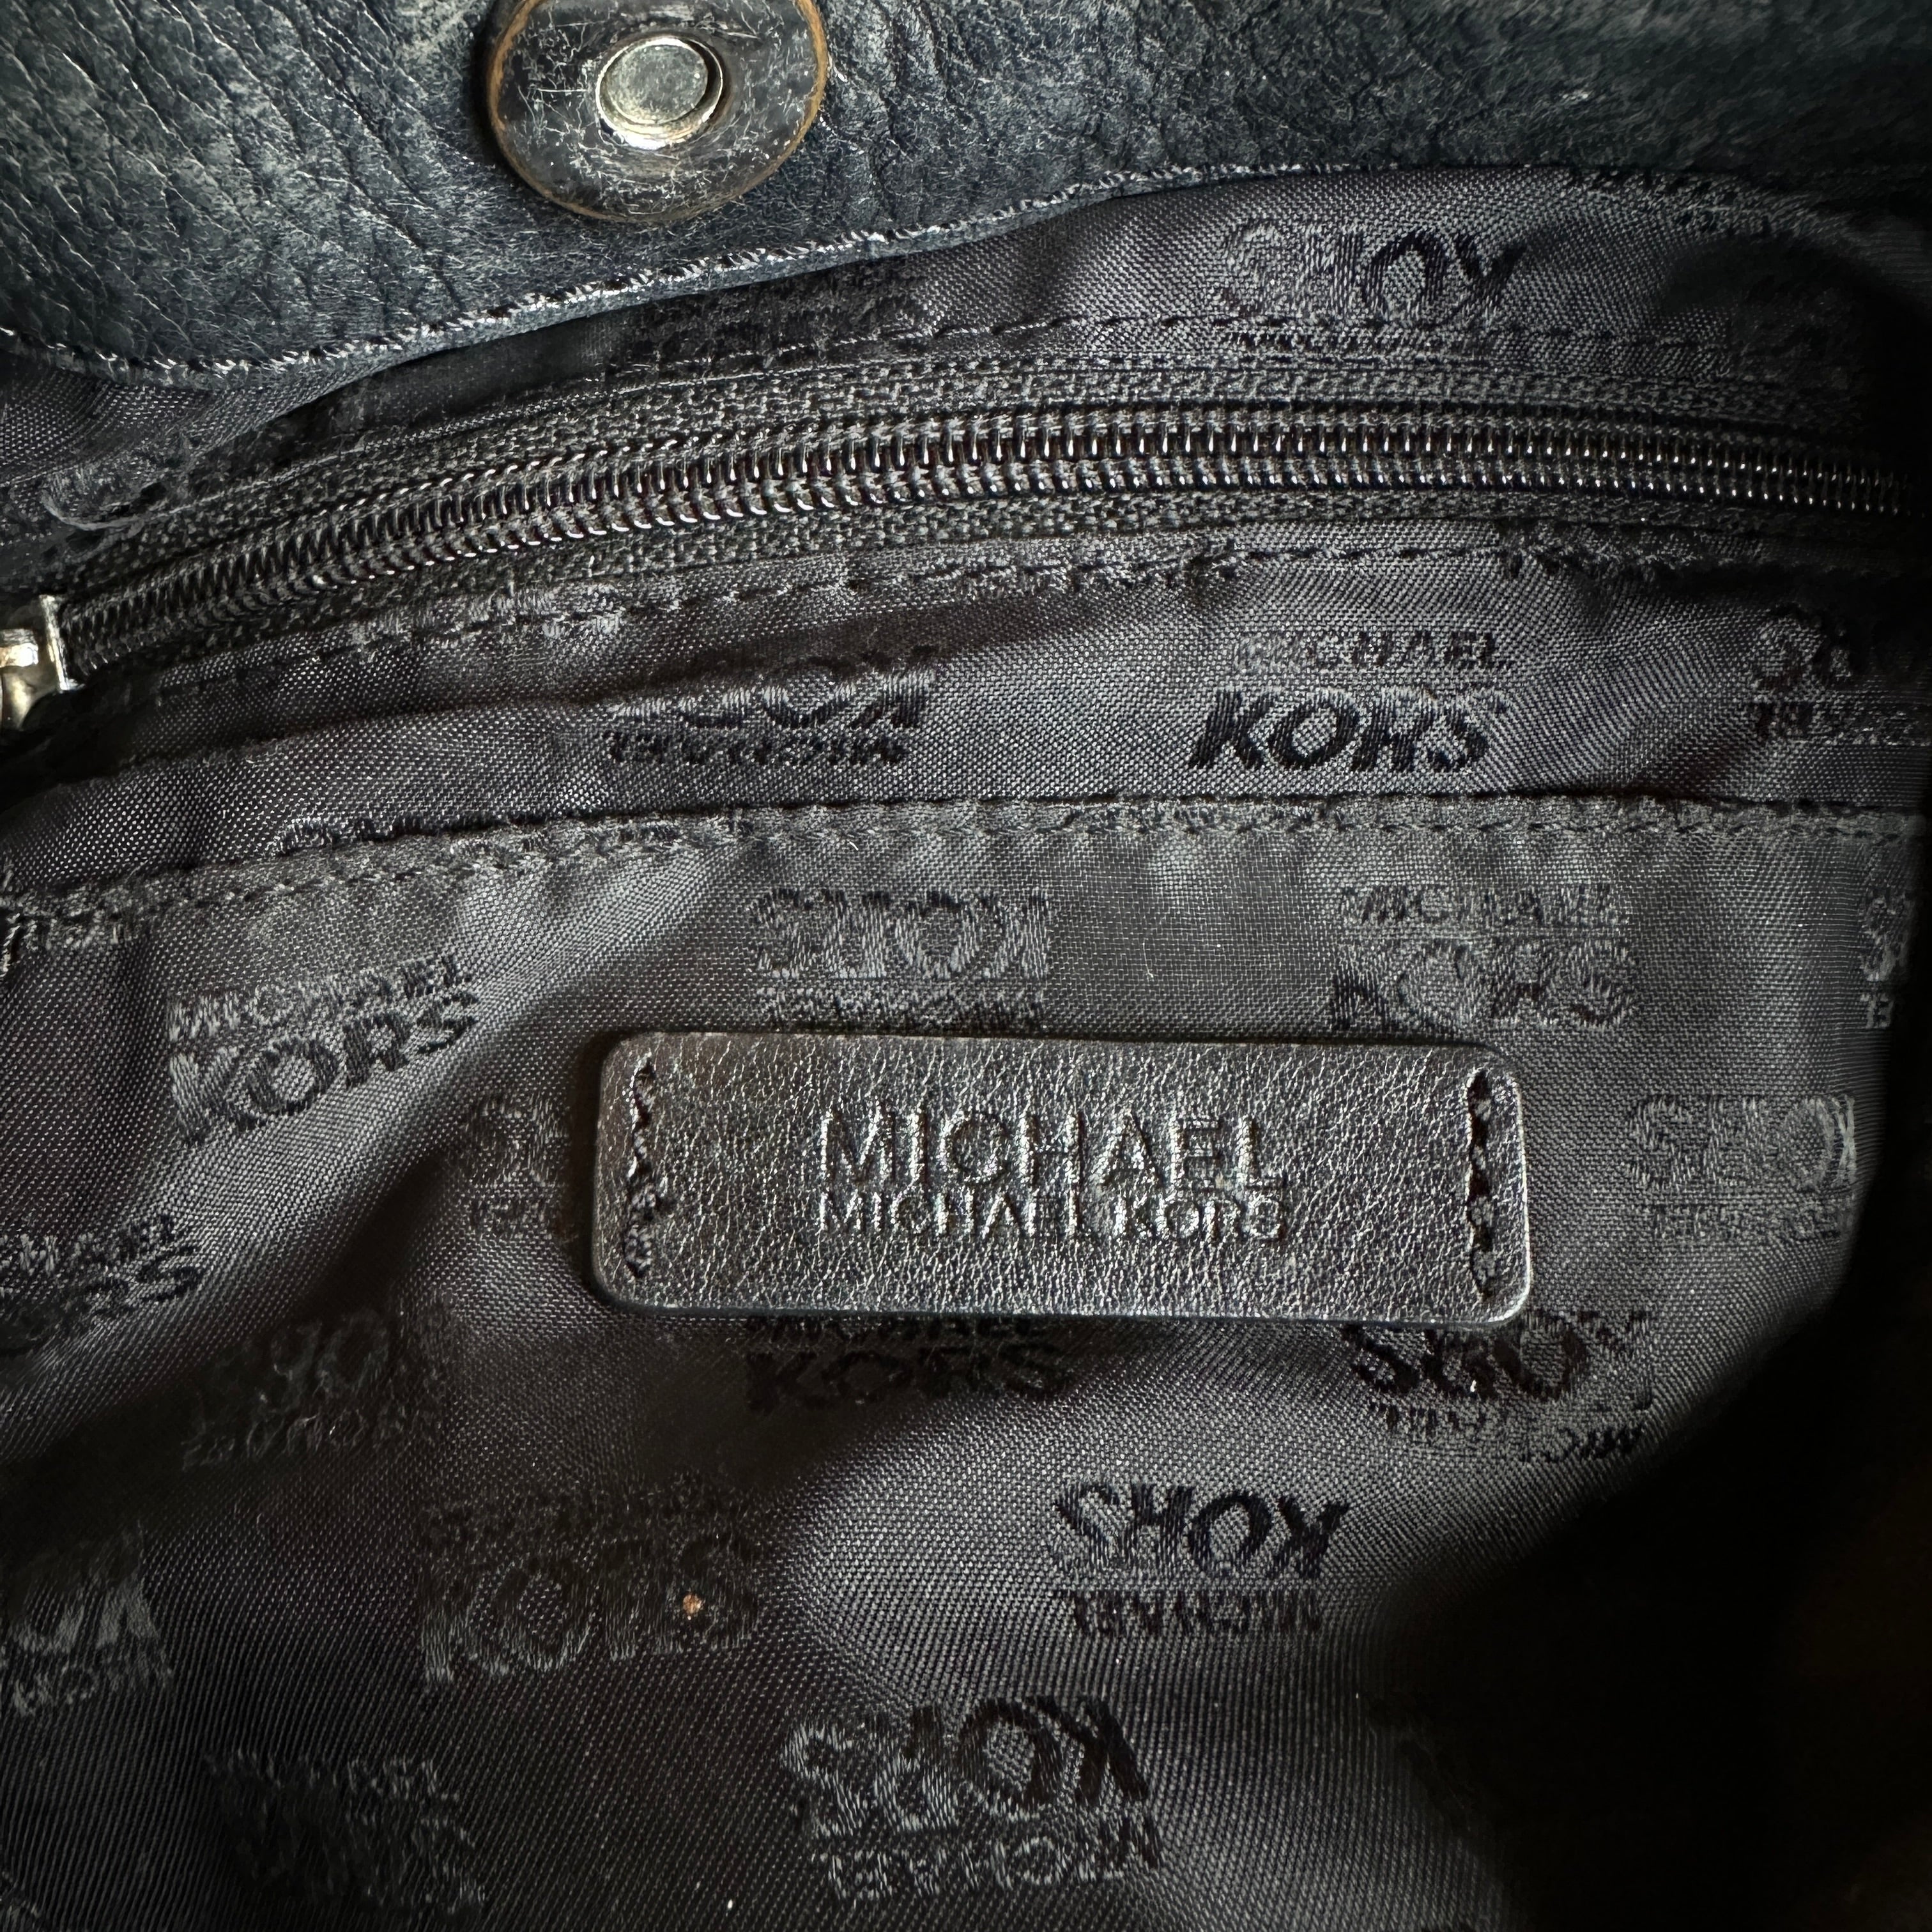 “Michael Kors” Black Leather Studded Tote W/ Crossbody strap